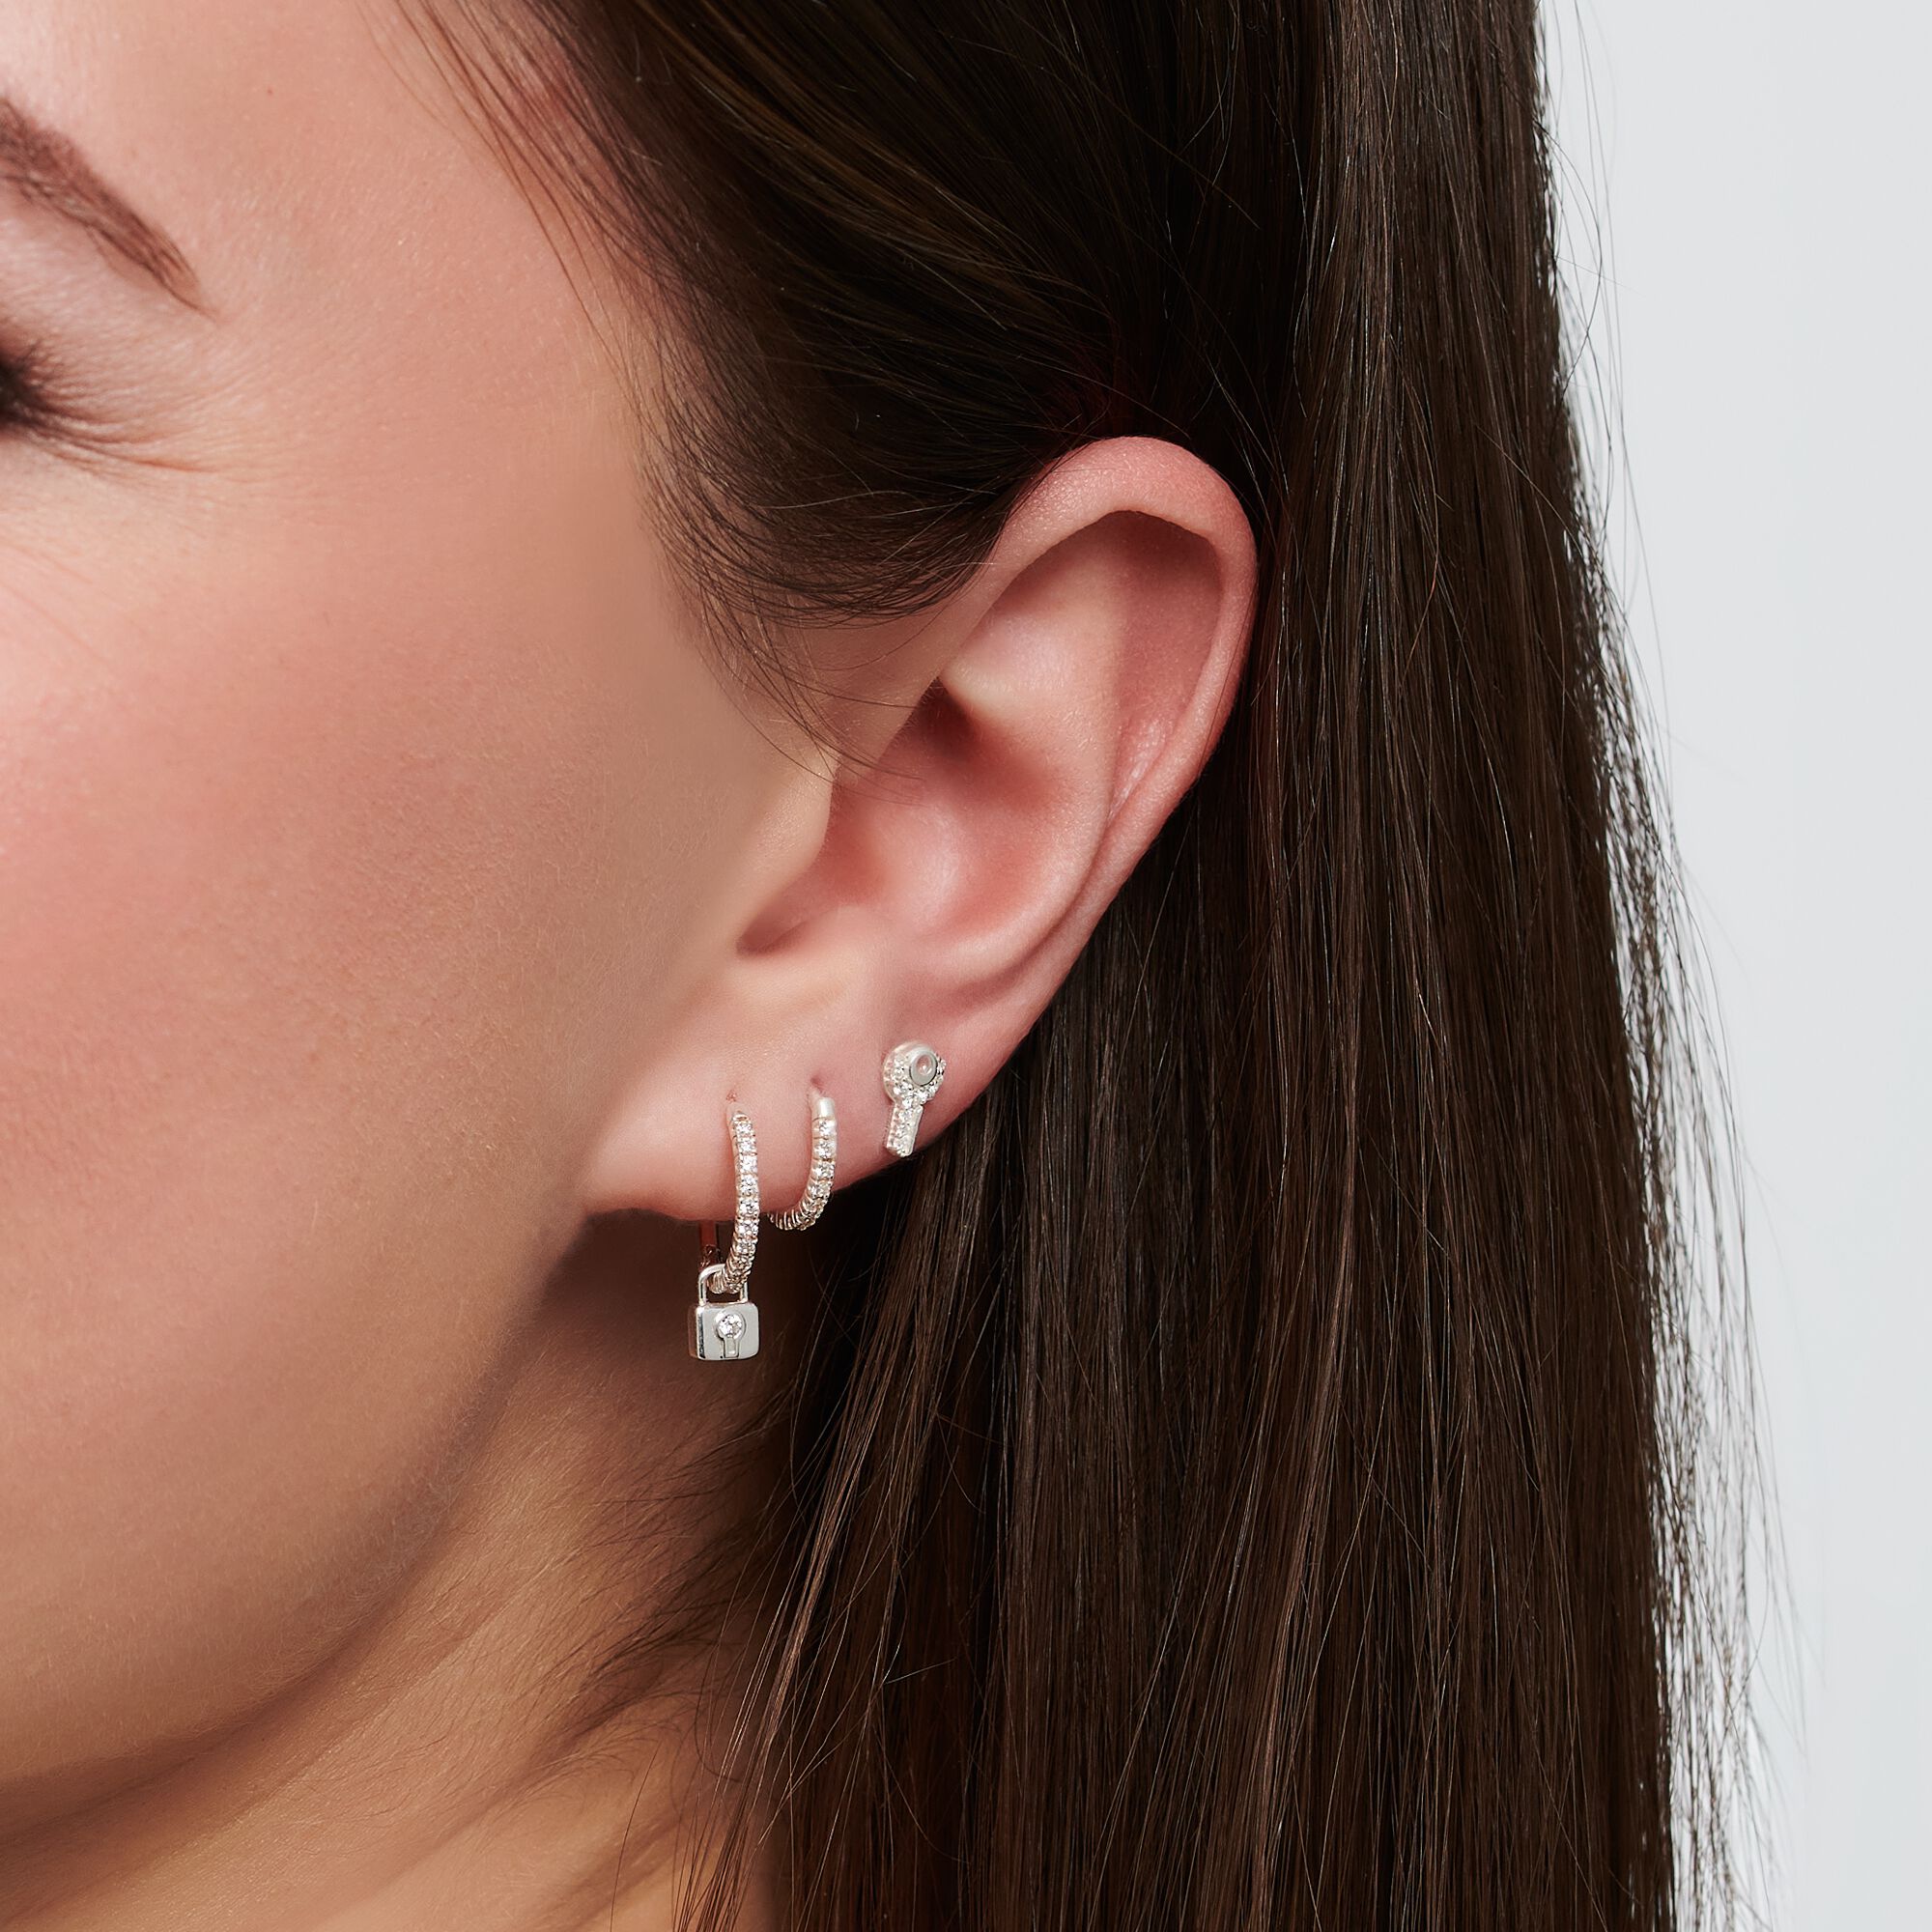 Silver single ear stud in key design | THOMAS SABO